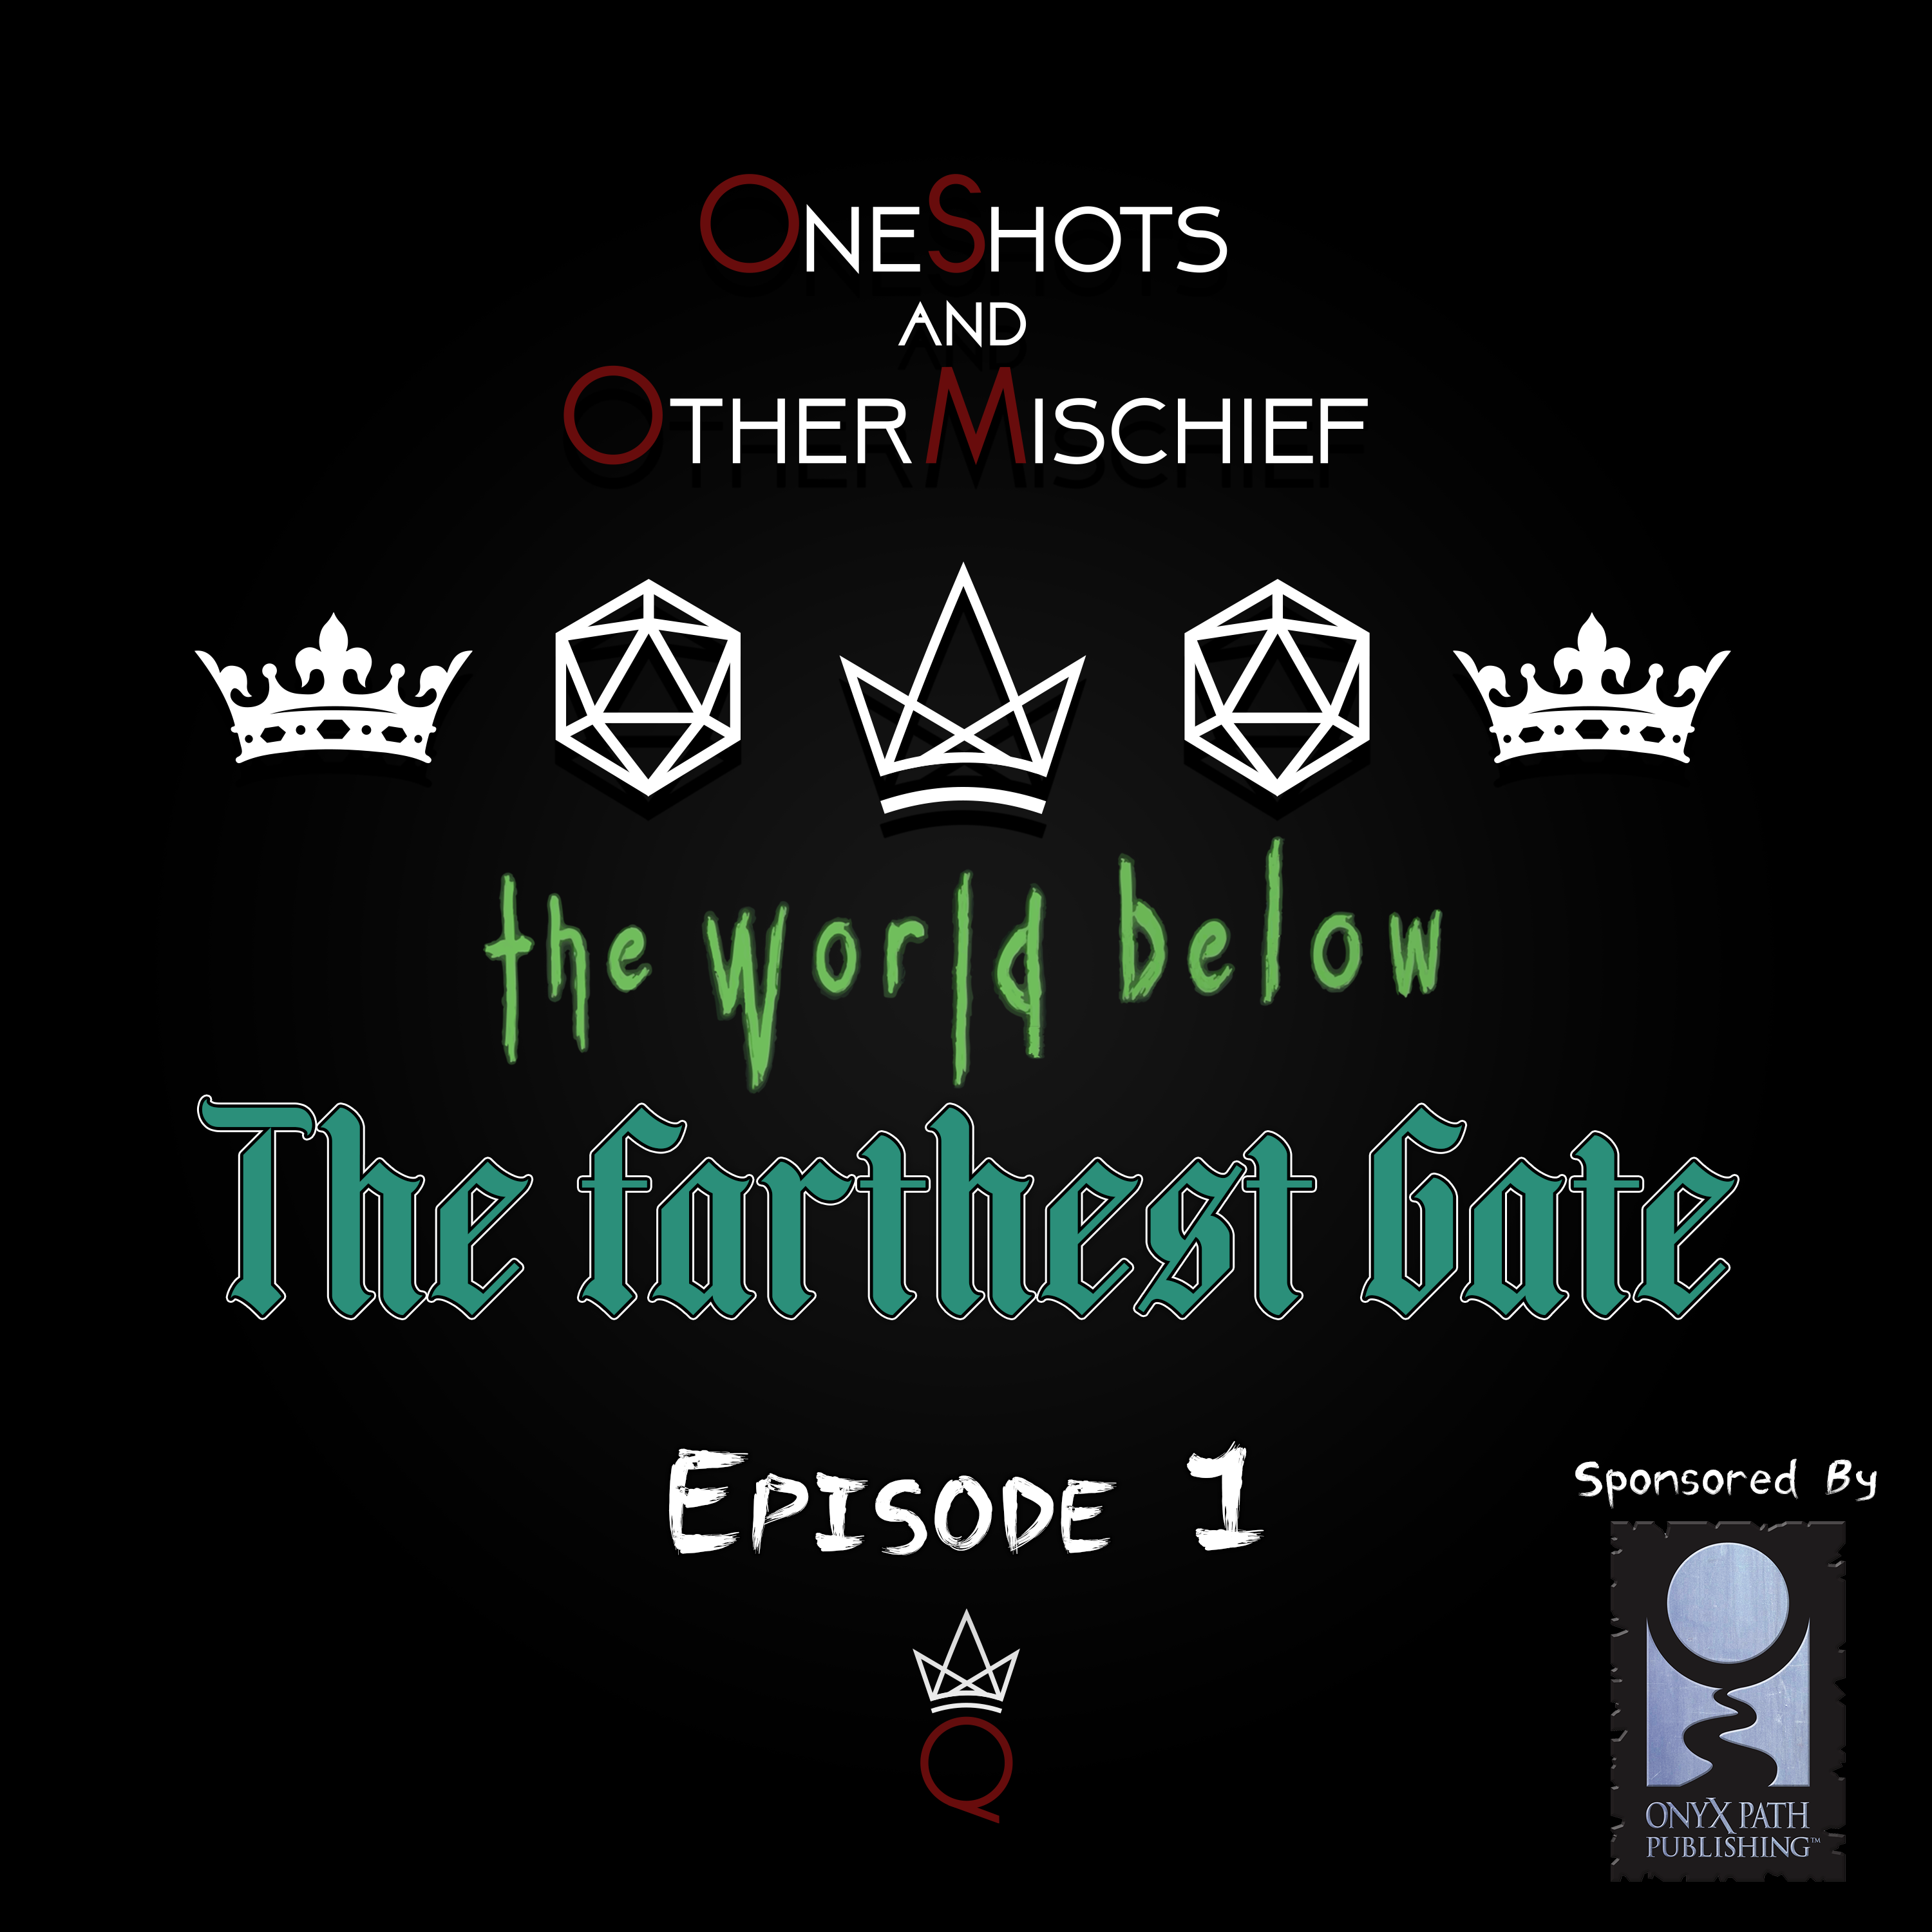 The World Below - The Farthest Gate, Episode 1